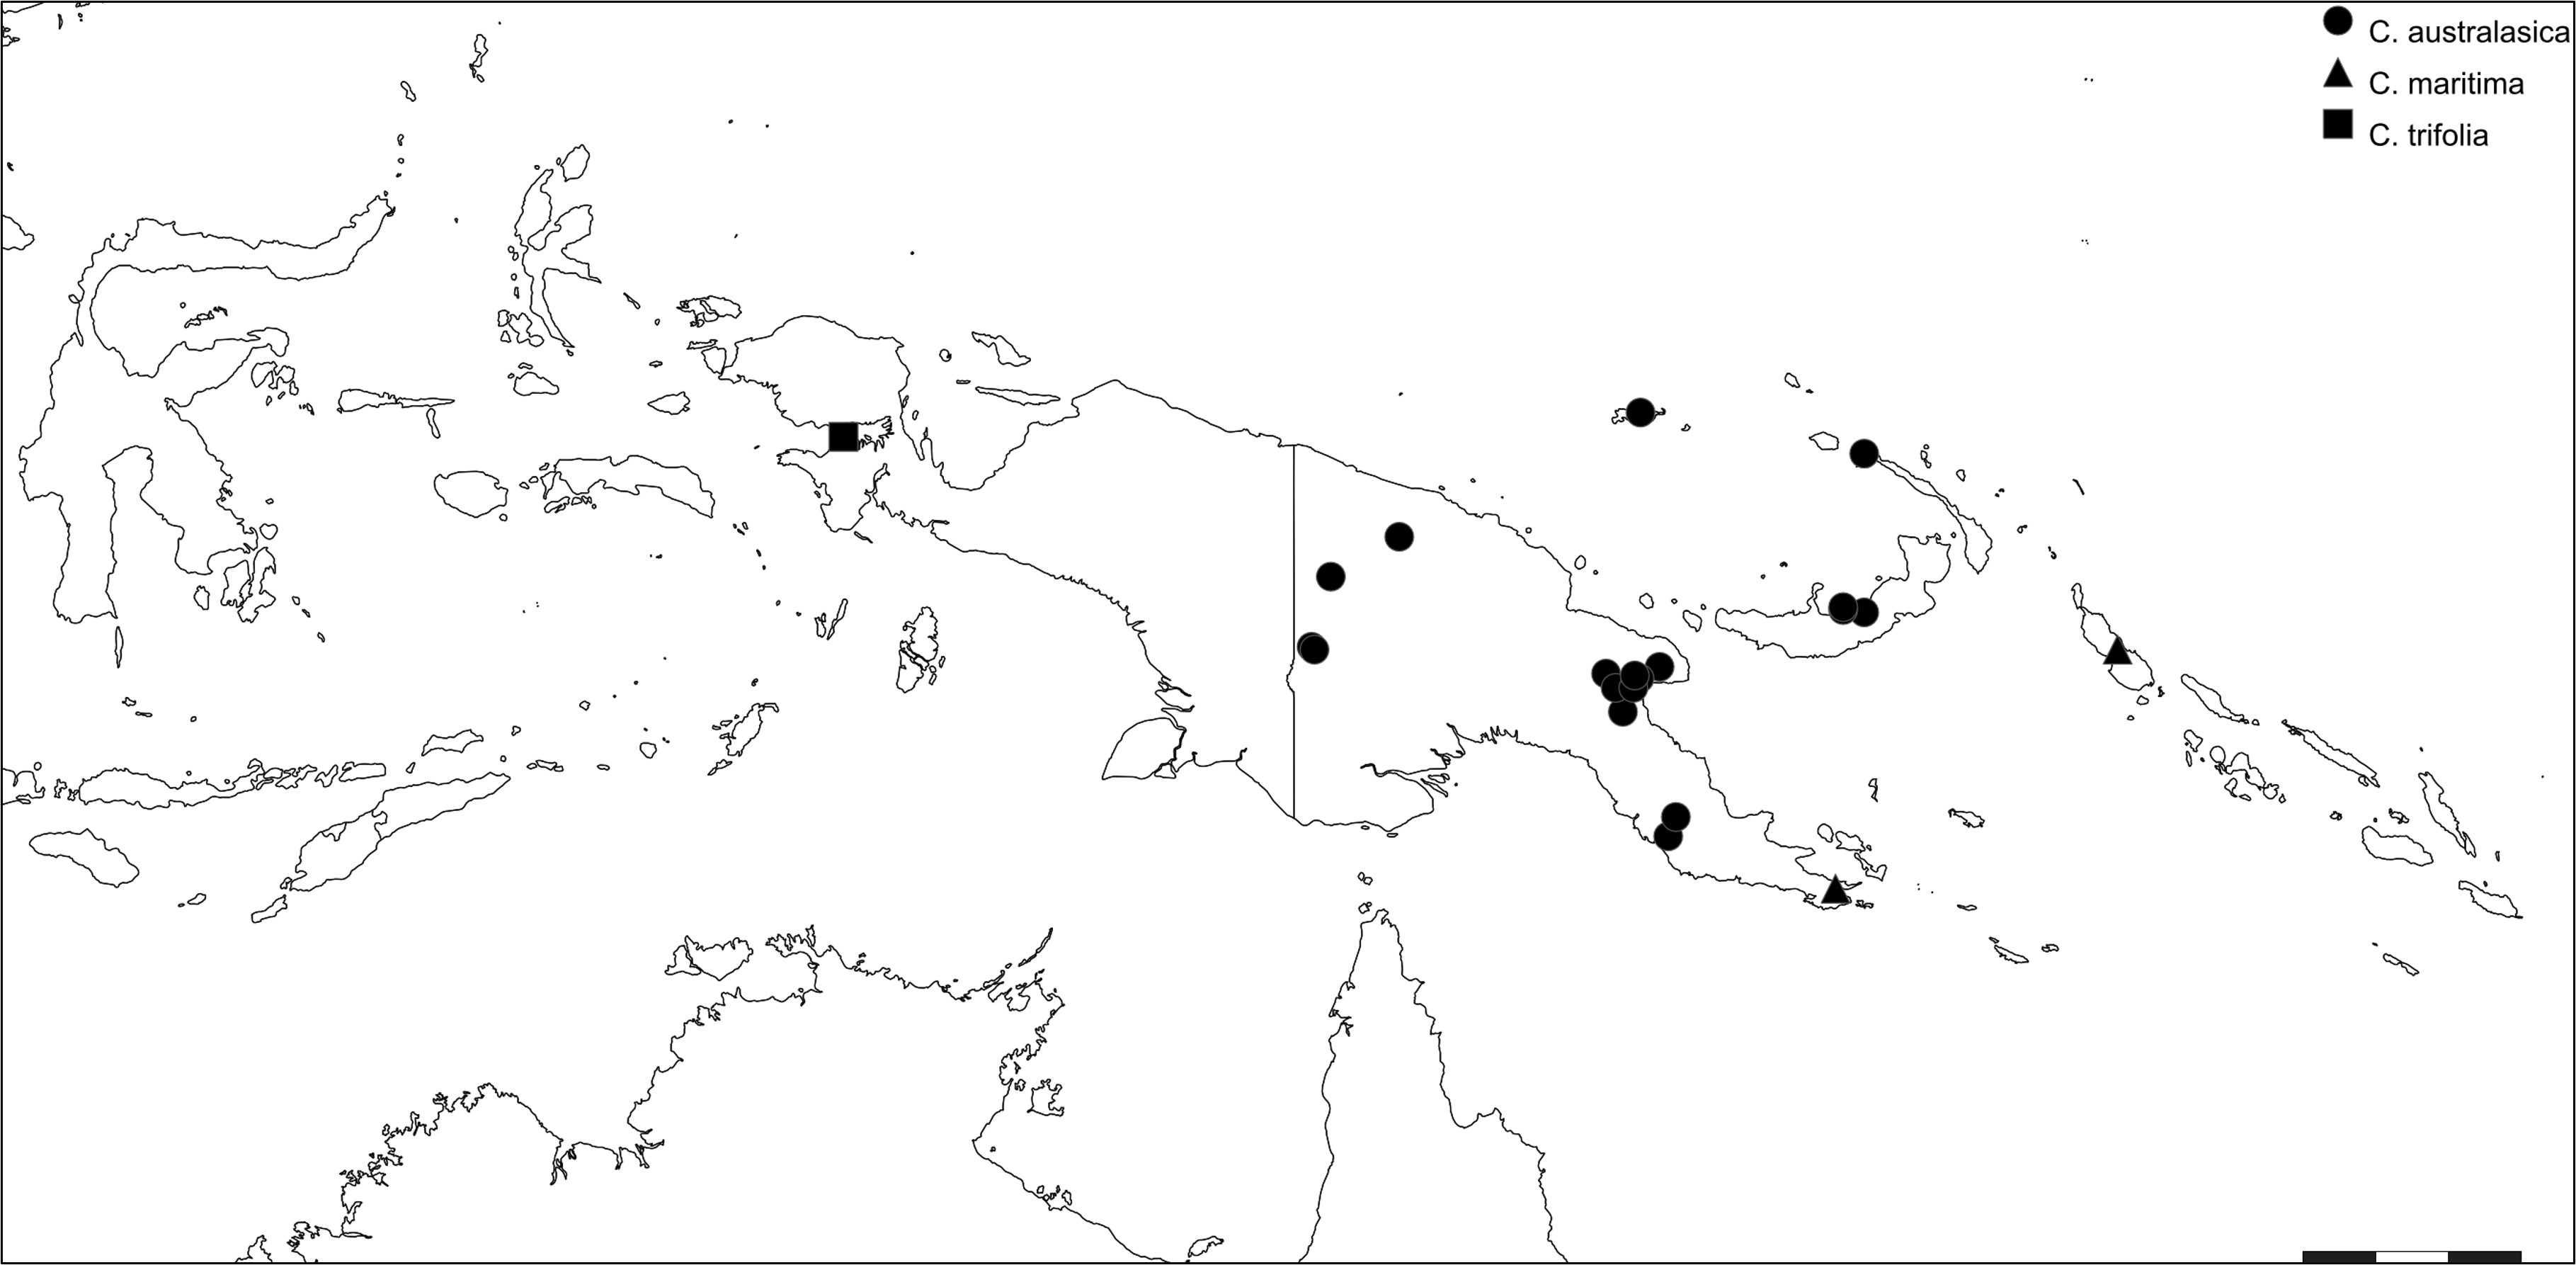 A map showing the distribution of Causonis australasica, Causonis maritima and Causonis trifolia in New Guinea.